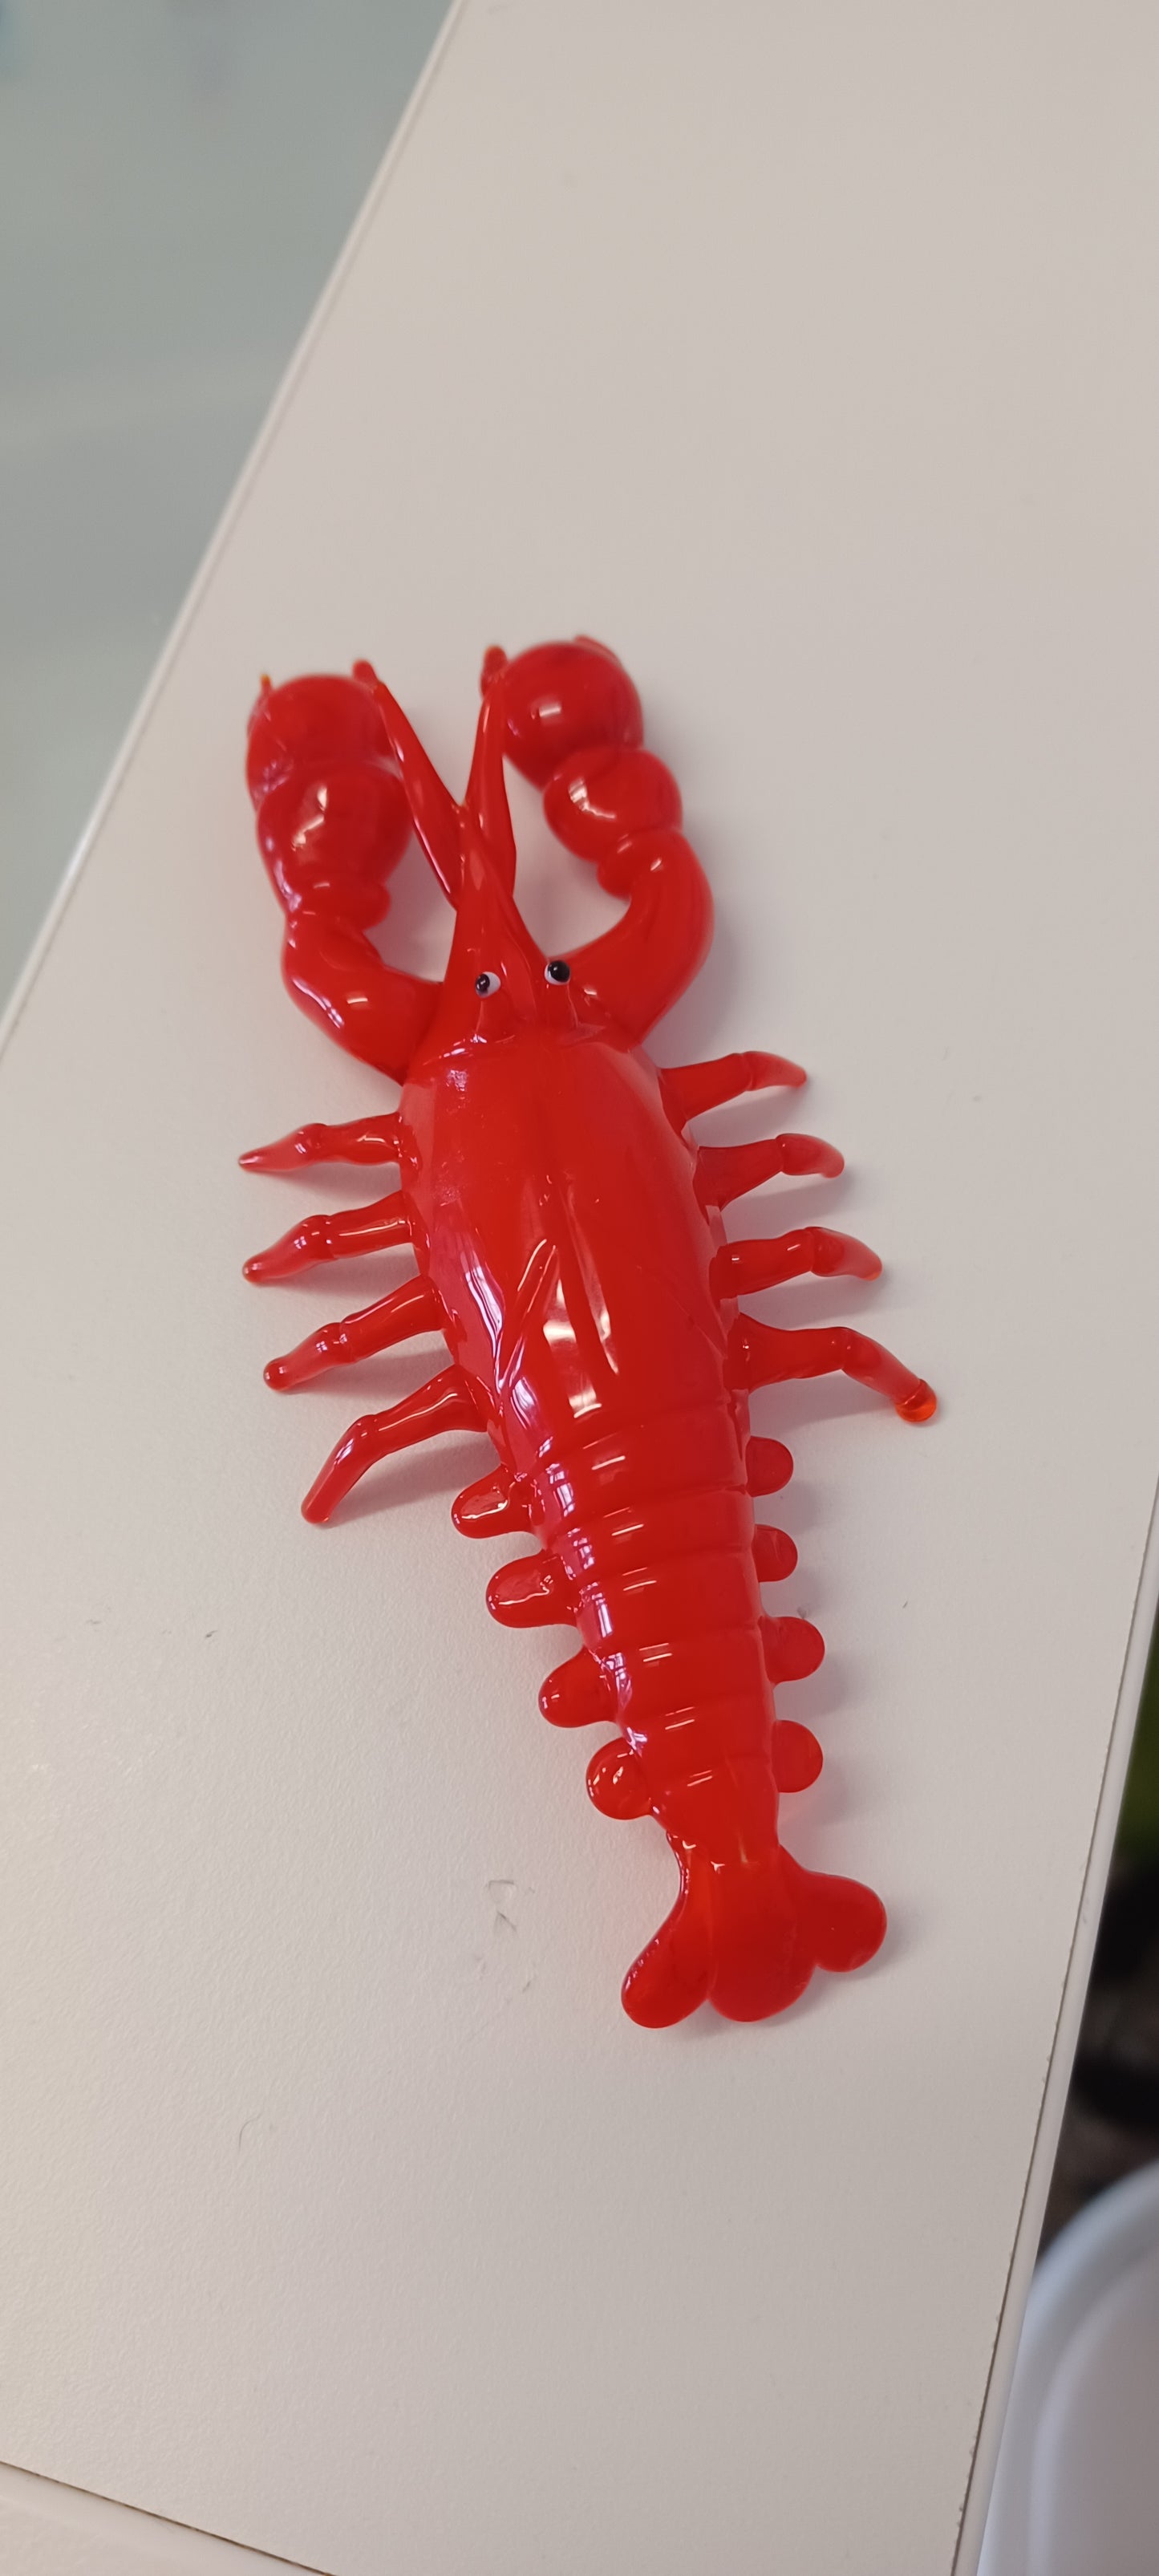 Glass Lobster